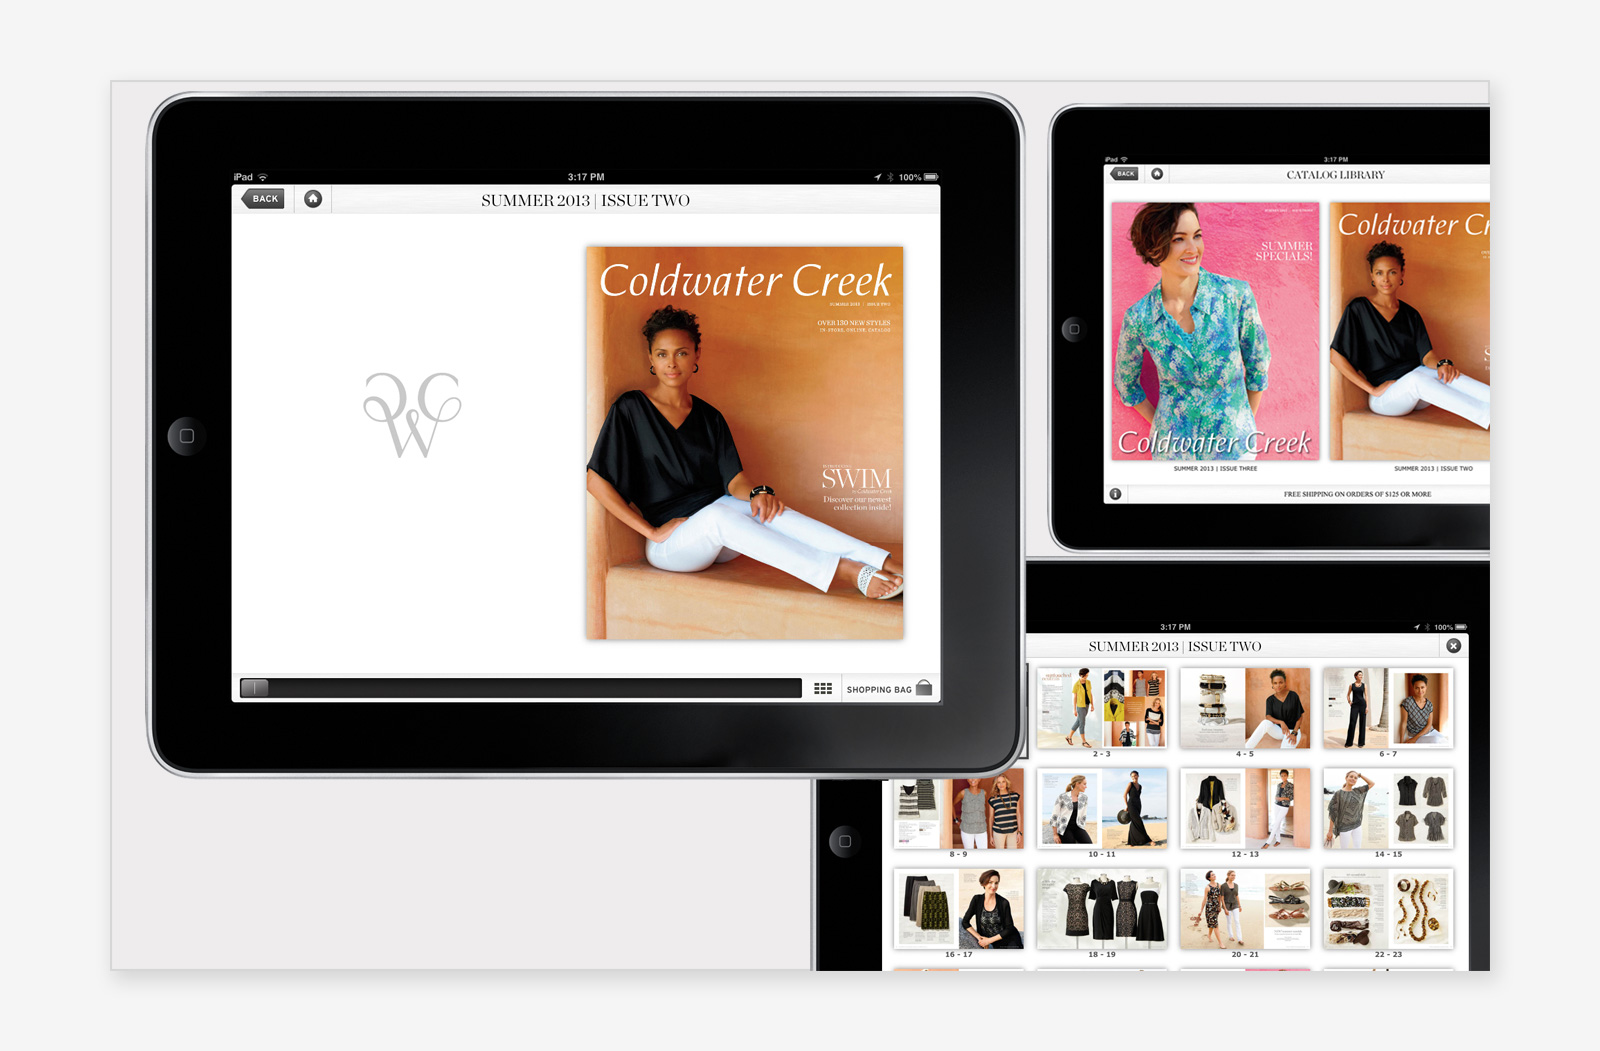 cwc-iPad-catalog.jpg